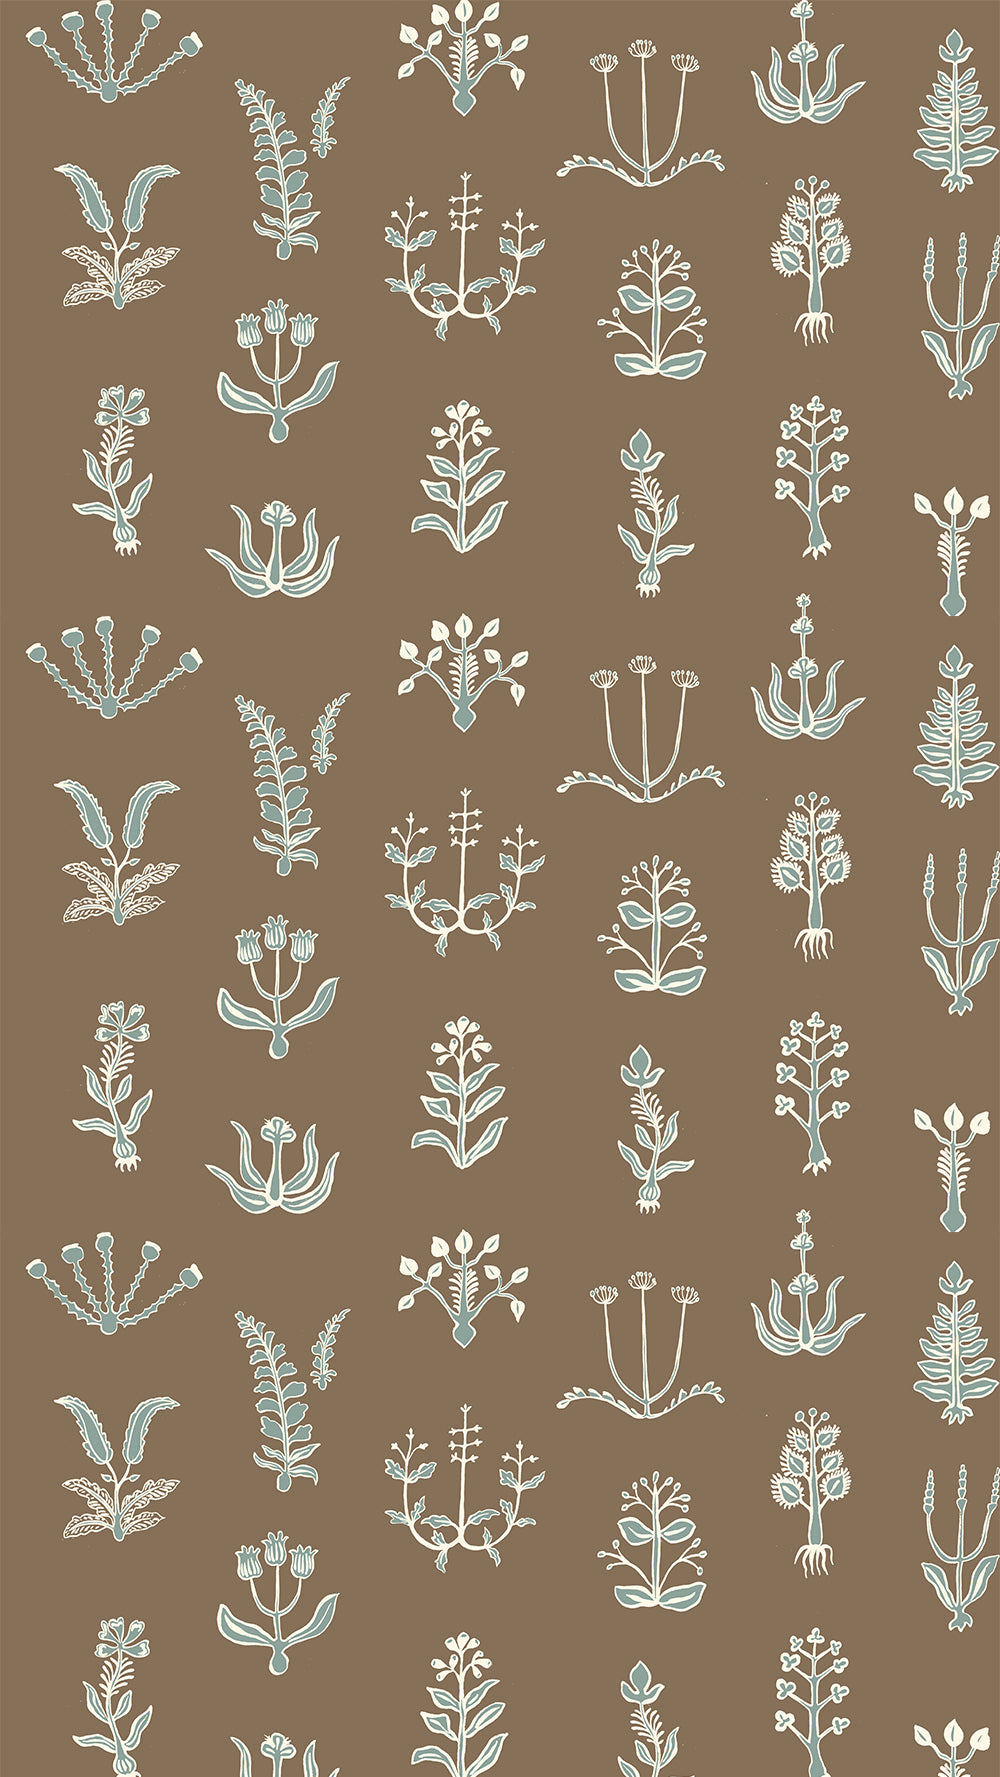 Josephine-Munsey-floral-spot-wallpaper-Clarke-white-Osney-blue-Kemp-brown-botanical-print-repeat-block-style-kitchen-wallpaper-floral-pattern